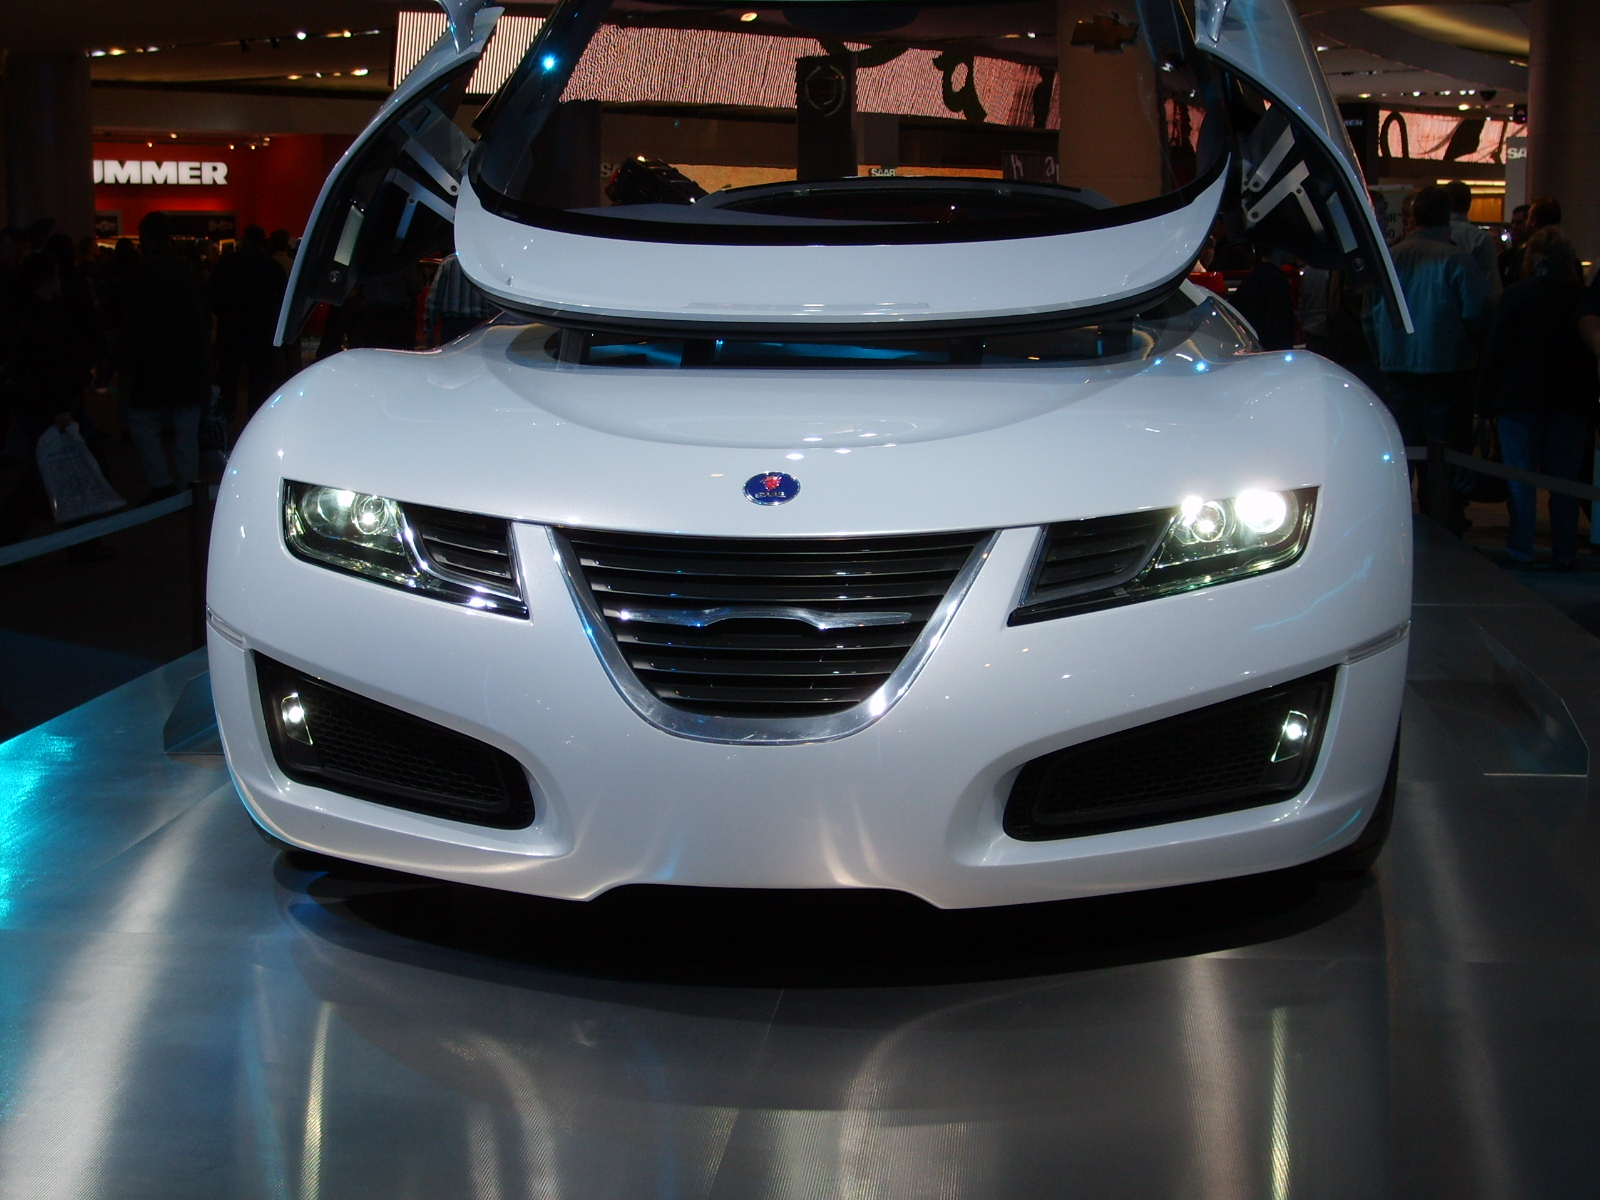 Saab Aero X concept - front | Flickr - Photo Sharing!